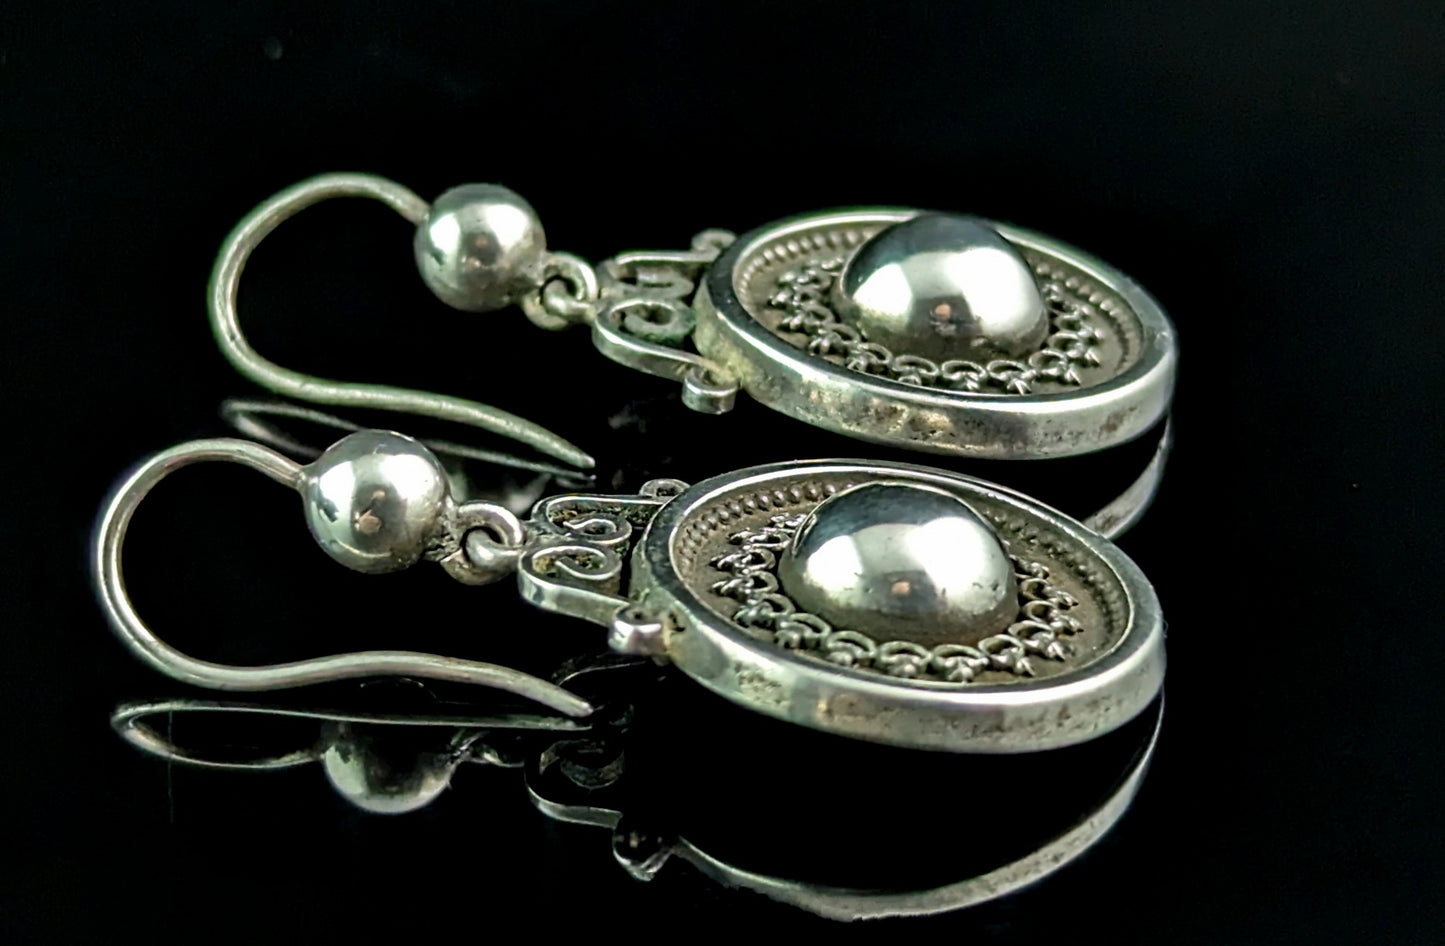 Antique Victorian sterling silver target earrings, drop earrings